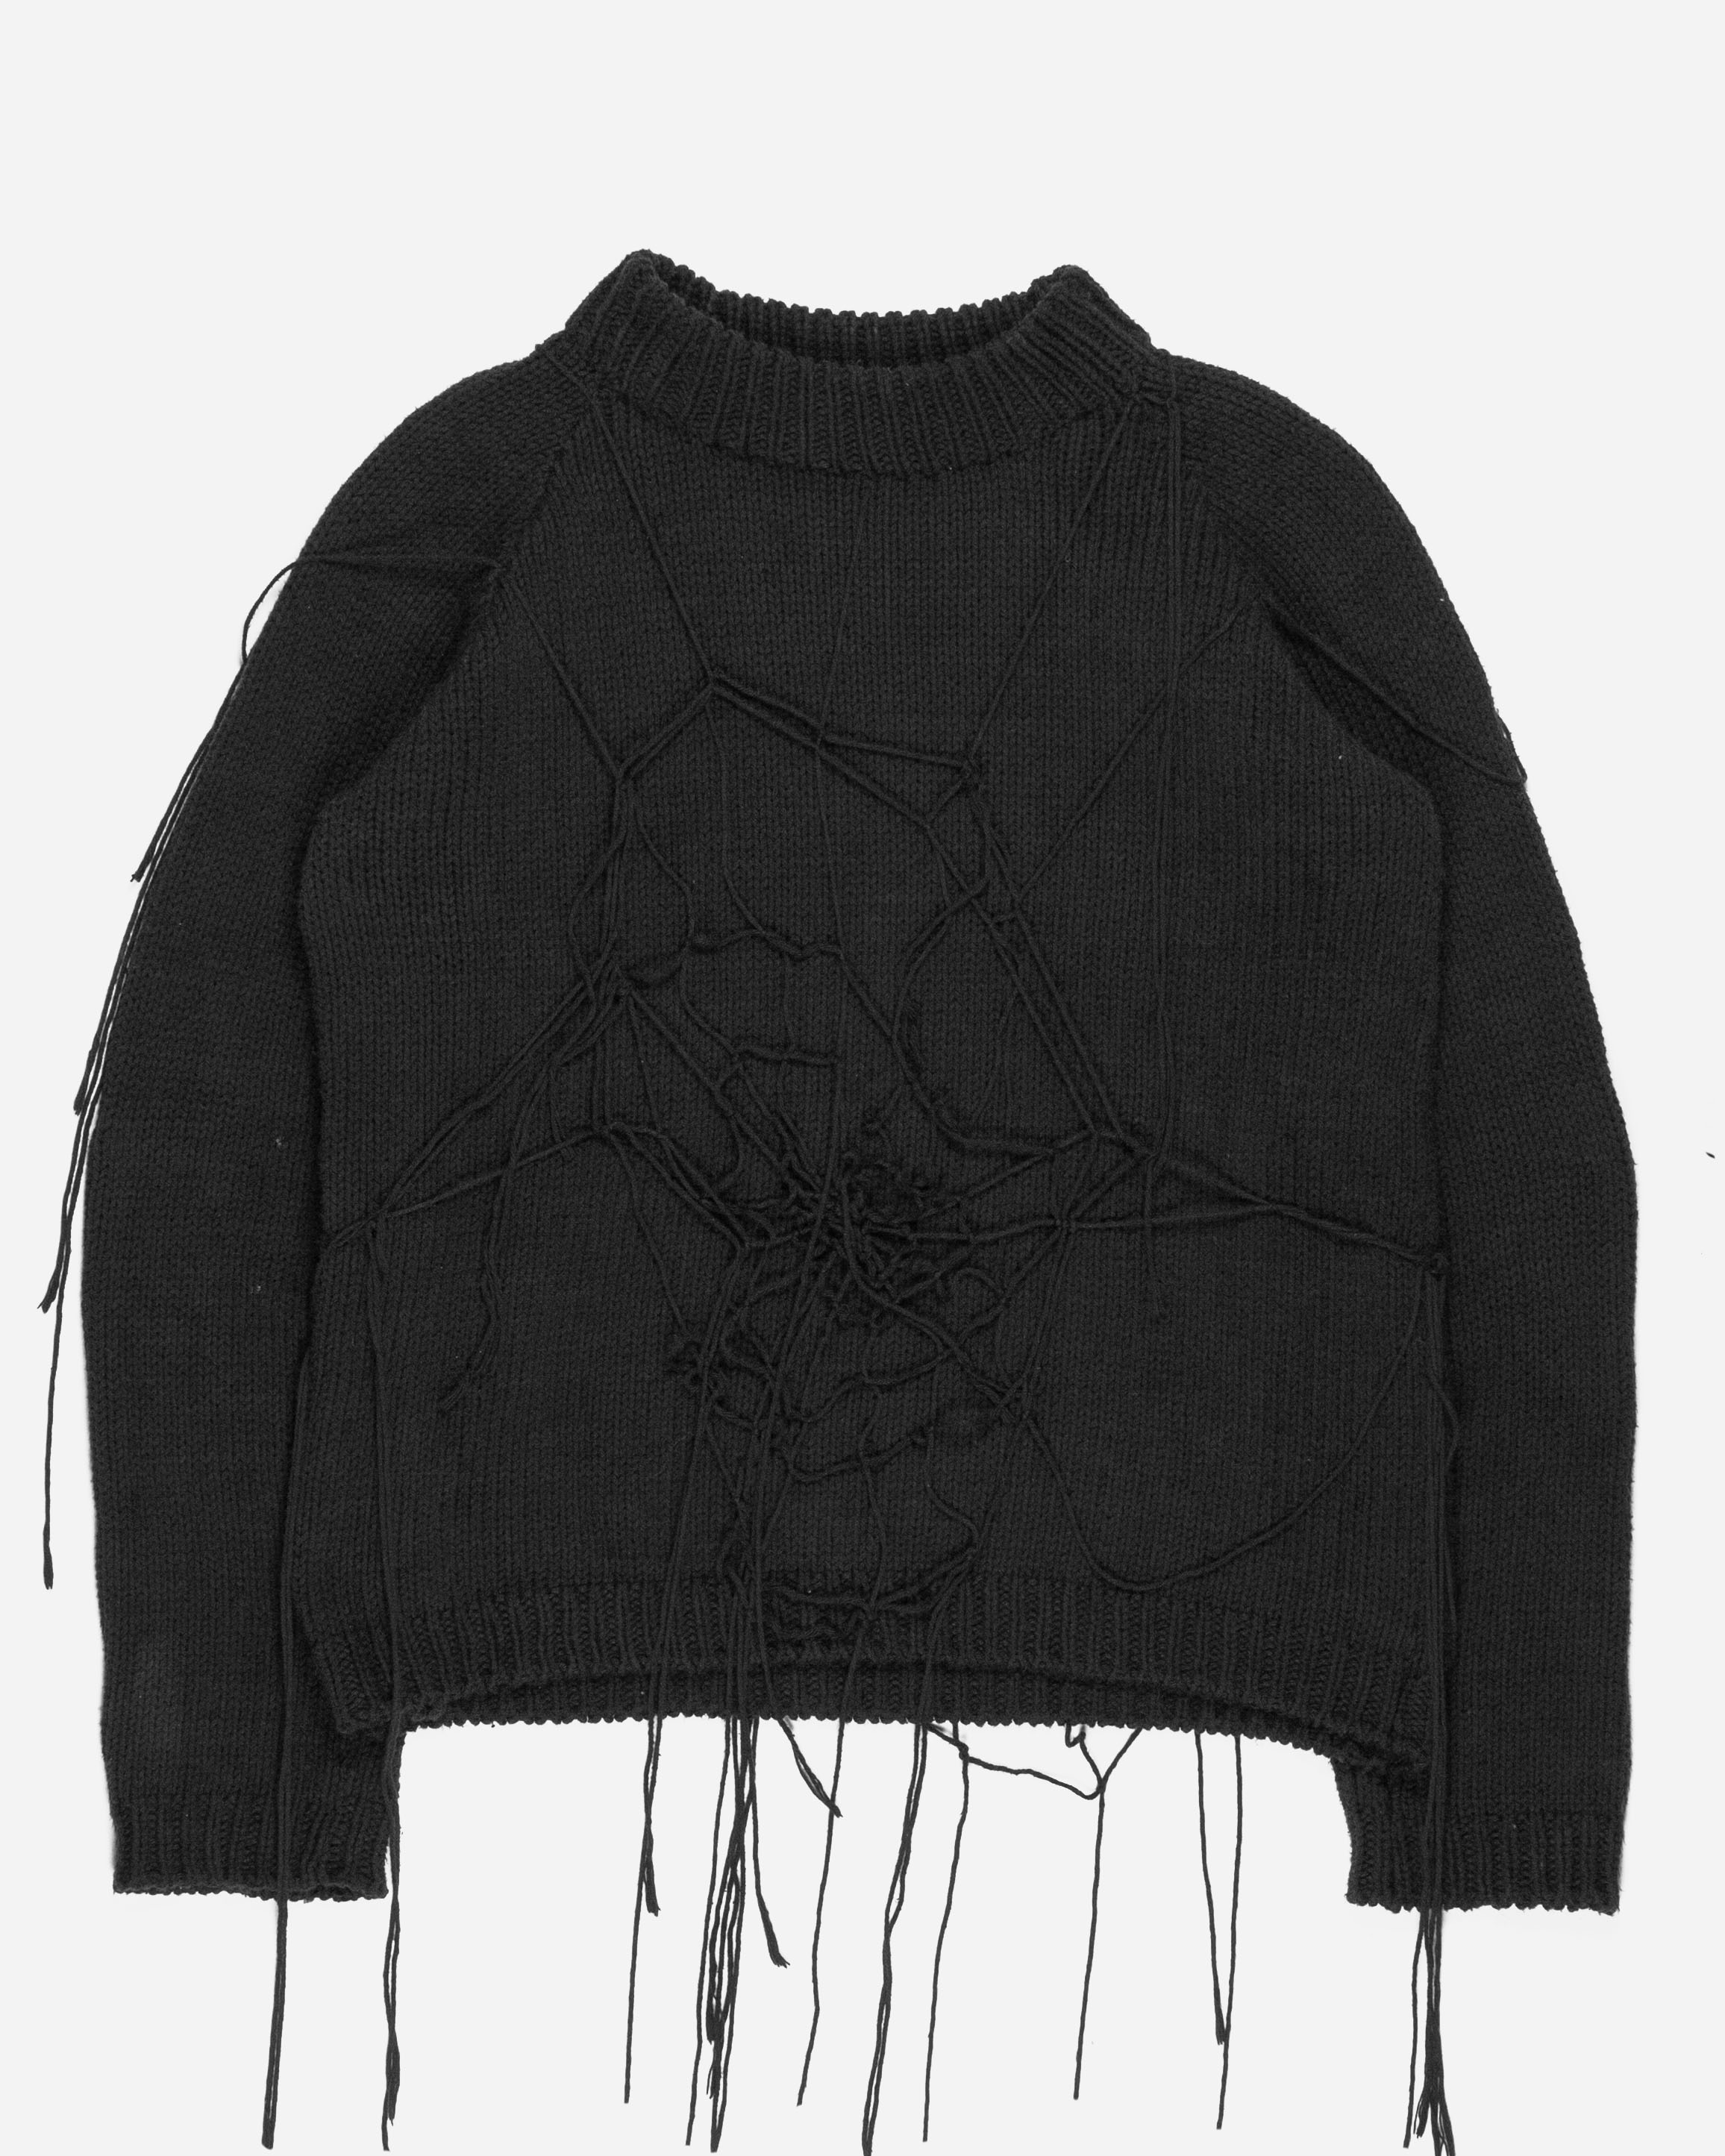 Raf Simons “Radioactivity” Spider Knit Sweater - AW98 